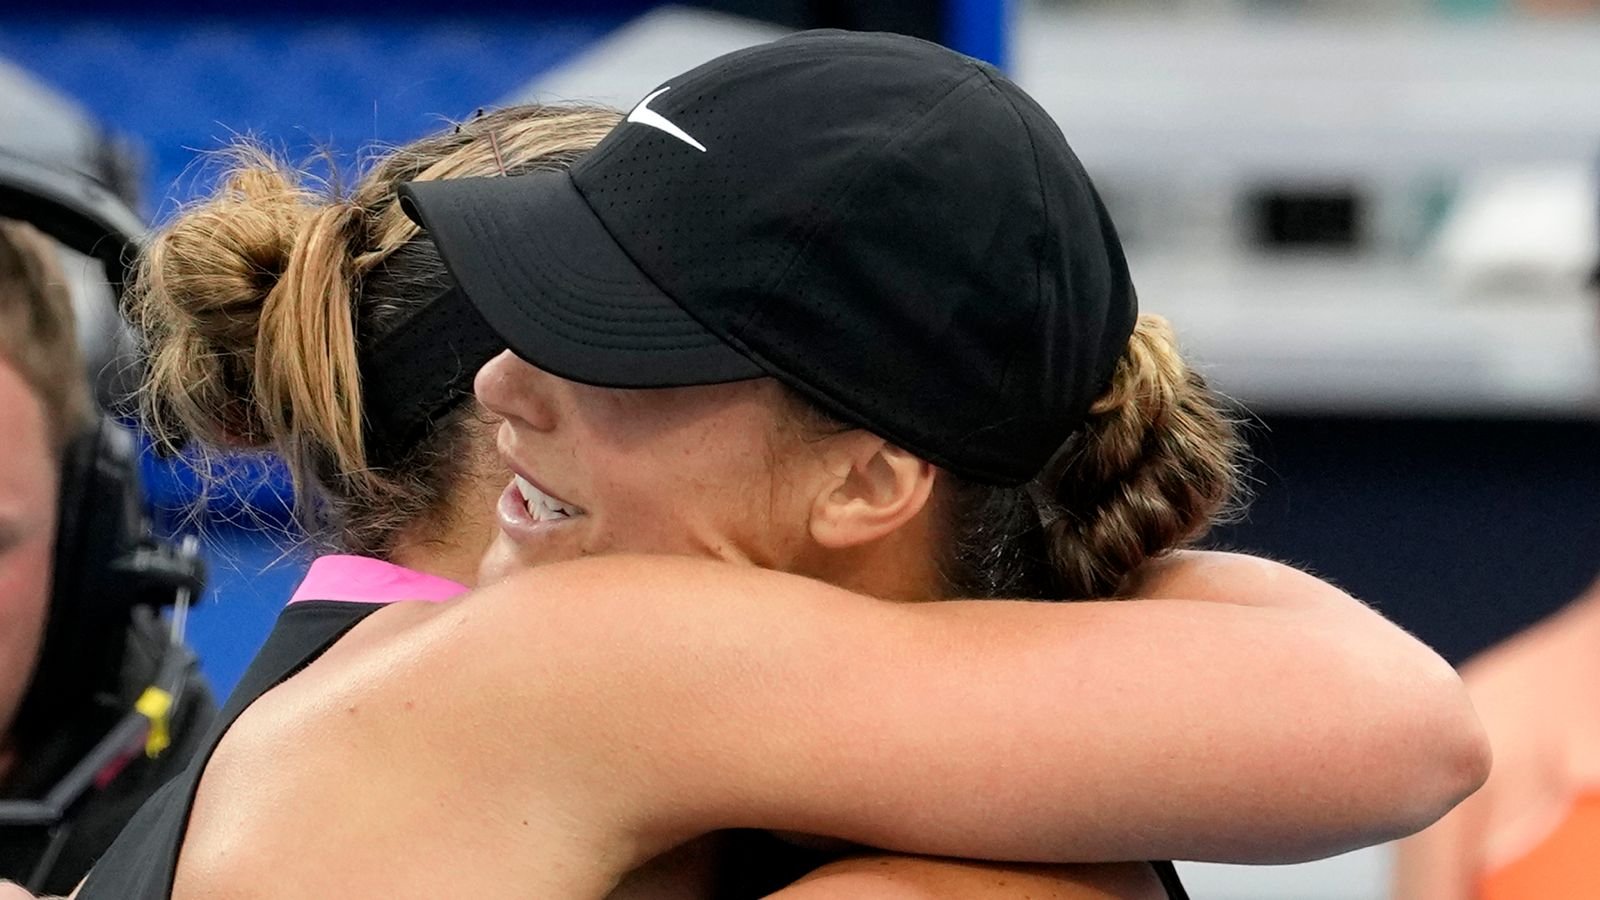 Miami Open: Aryna Sabalenka beats Paulo Badosa after emotional week following death of former boyfriend Konstantin Koltsov | Tennis News